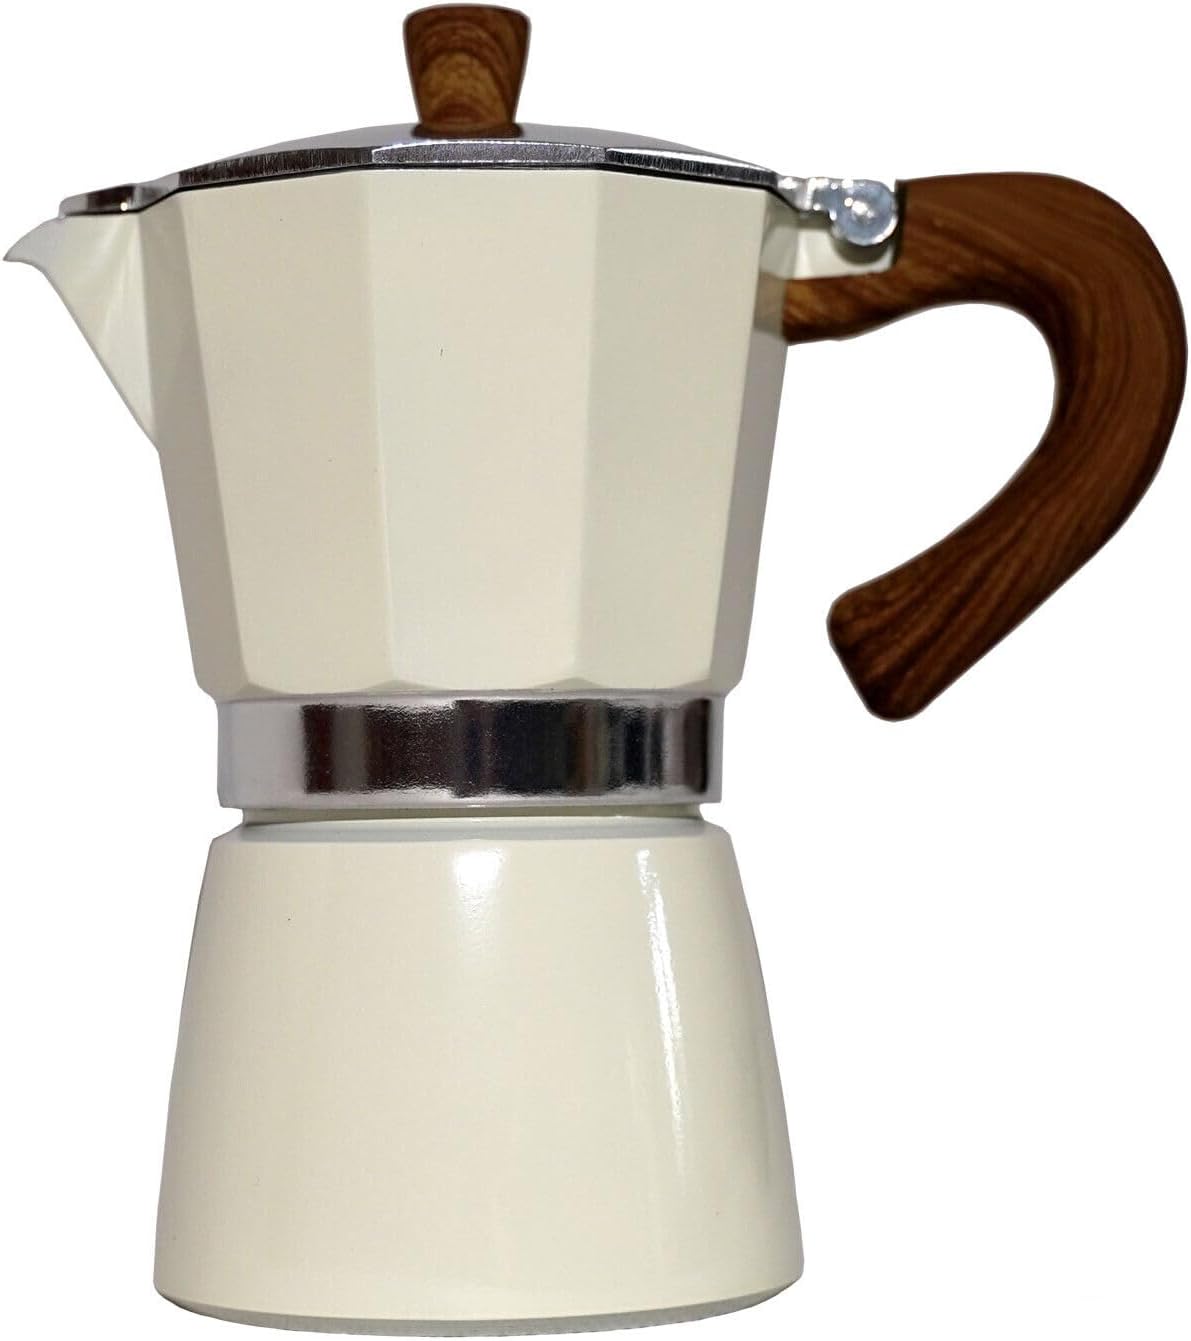 Crisis -Proviant Karlspace Premium Espresso Maker Coffee Aluminum for 6 Cup - In Various Colors - Top, Espresso Maker, Italian Coffee, Moka Jug Coffee Maker Aluminum (White)